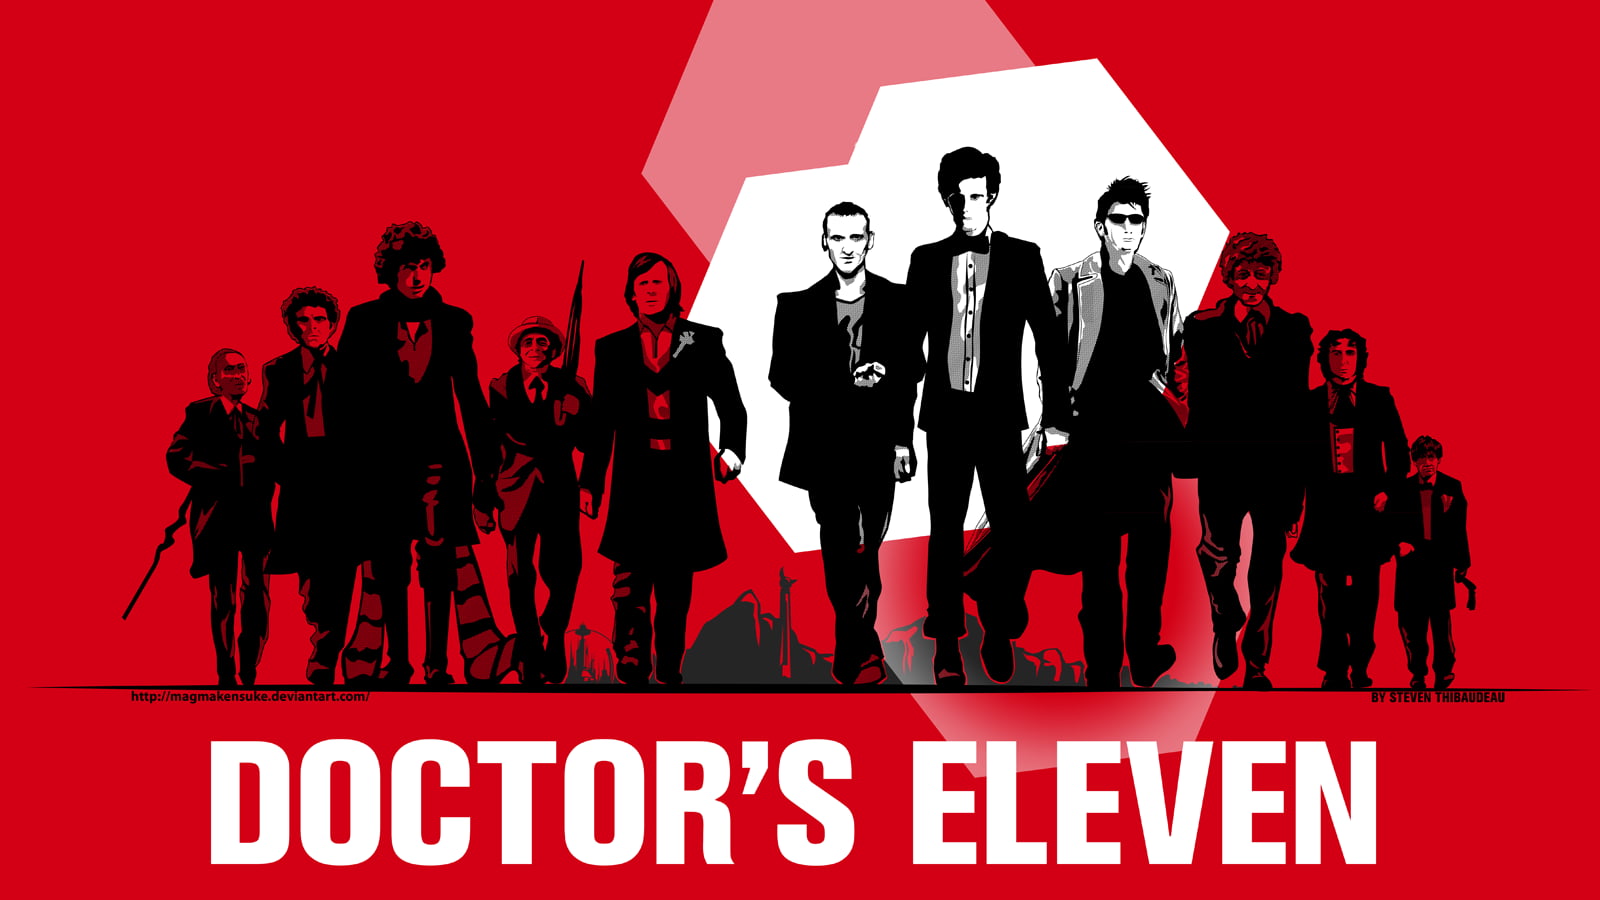 Doctor's Eleven wallpaper, Doctor Who, Ocean's Eleven, red